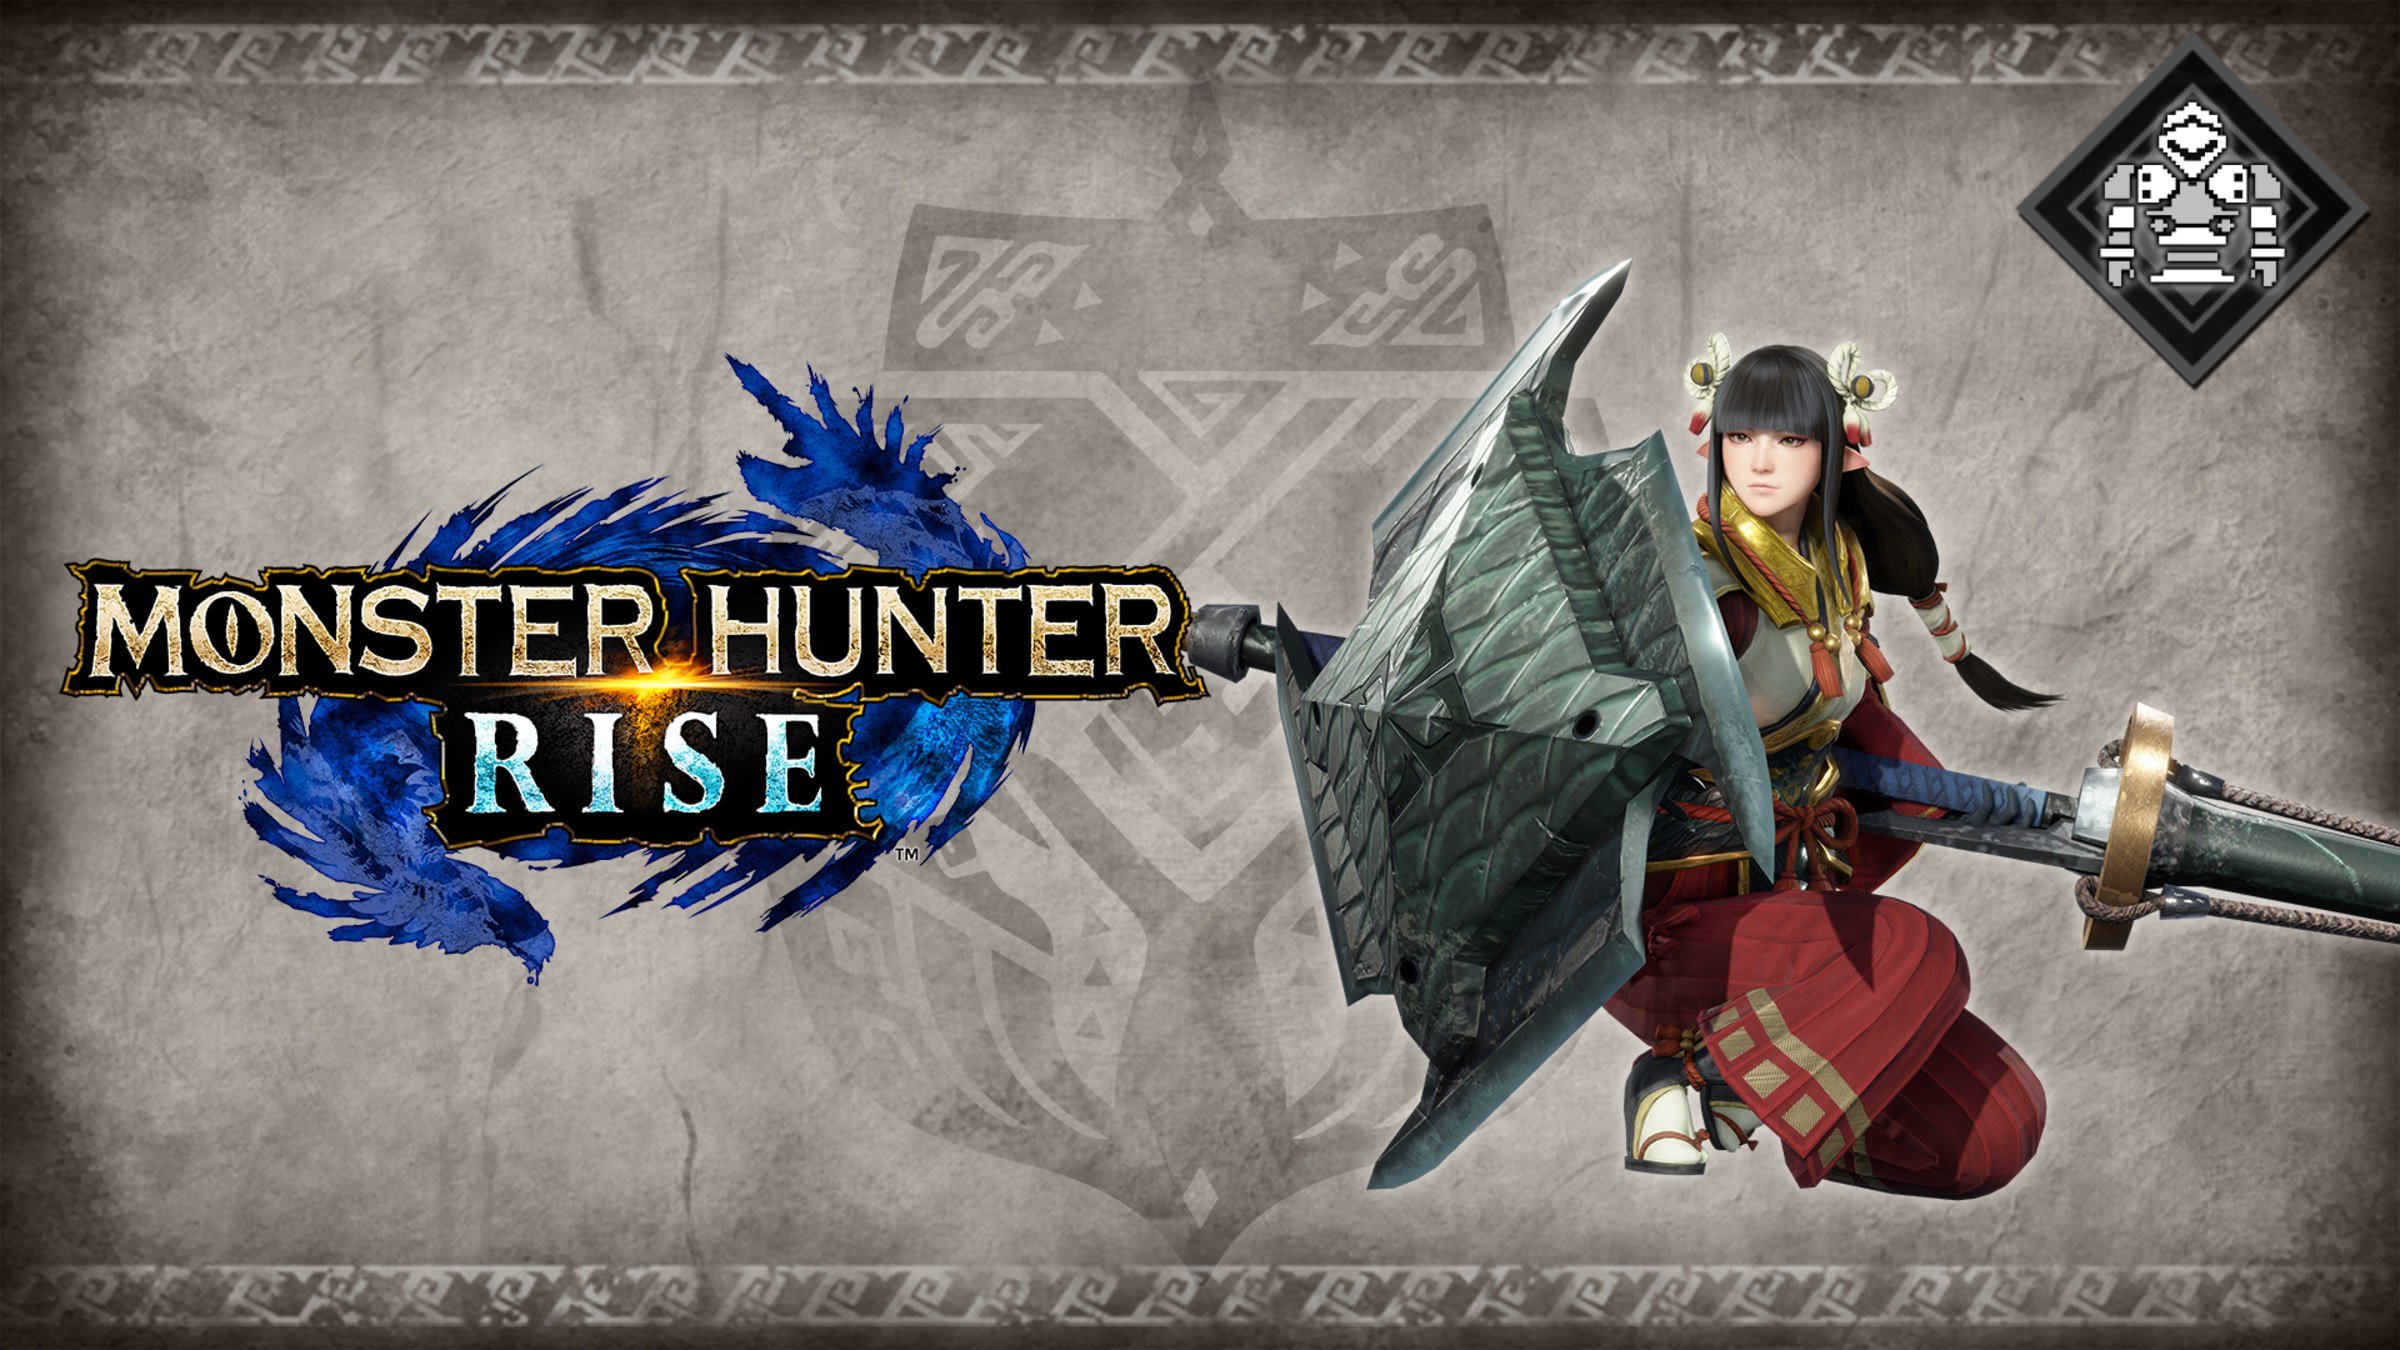 Monster Hunter Rise Mods, Know More Details About Monster Hunter Rise  Sunbreak - News